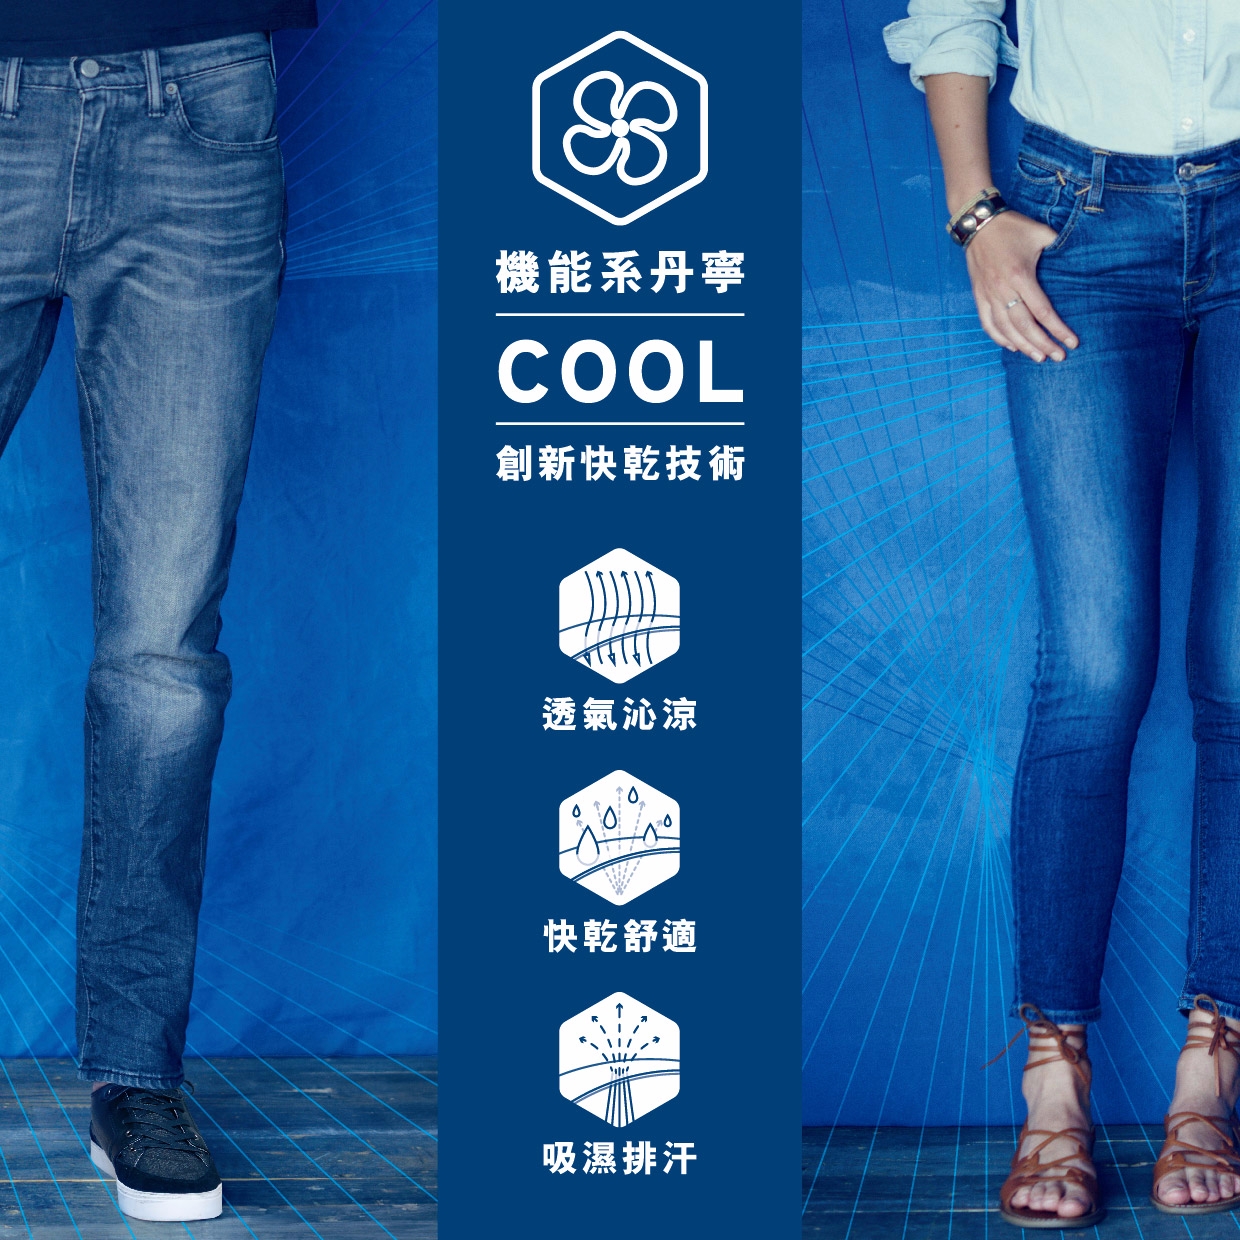 LEVI’S®全新涼感丹寧Cool Jeans 打造Cool夏必備丹寧解方 環保機能材質再升級 透氣沁涼更顯輕彈舒適